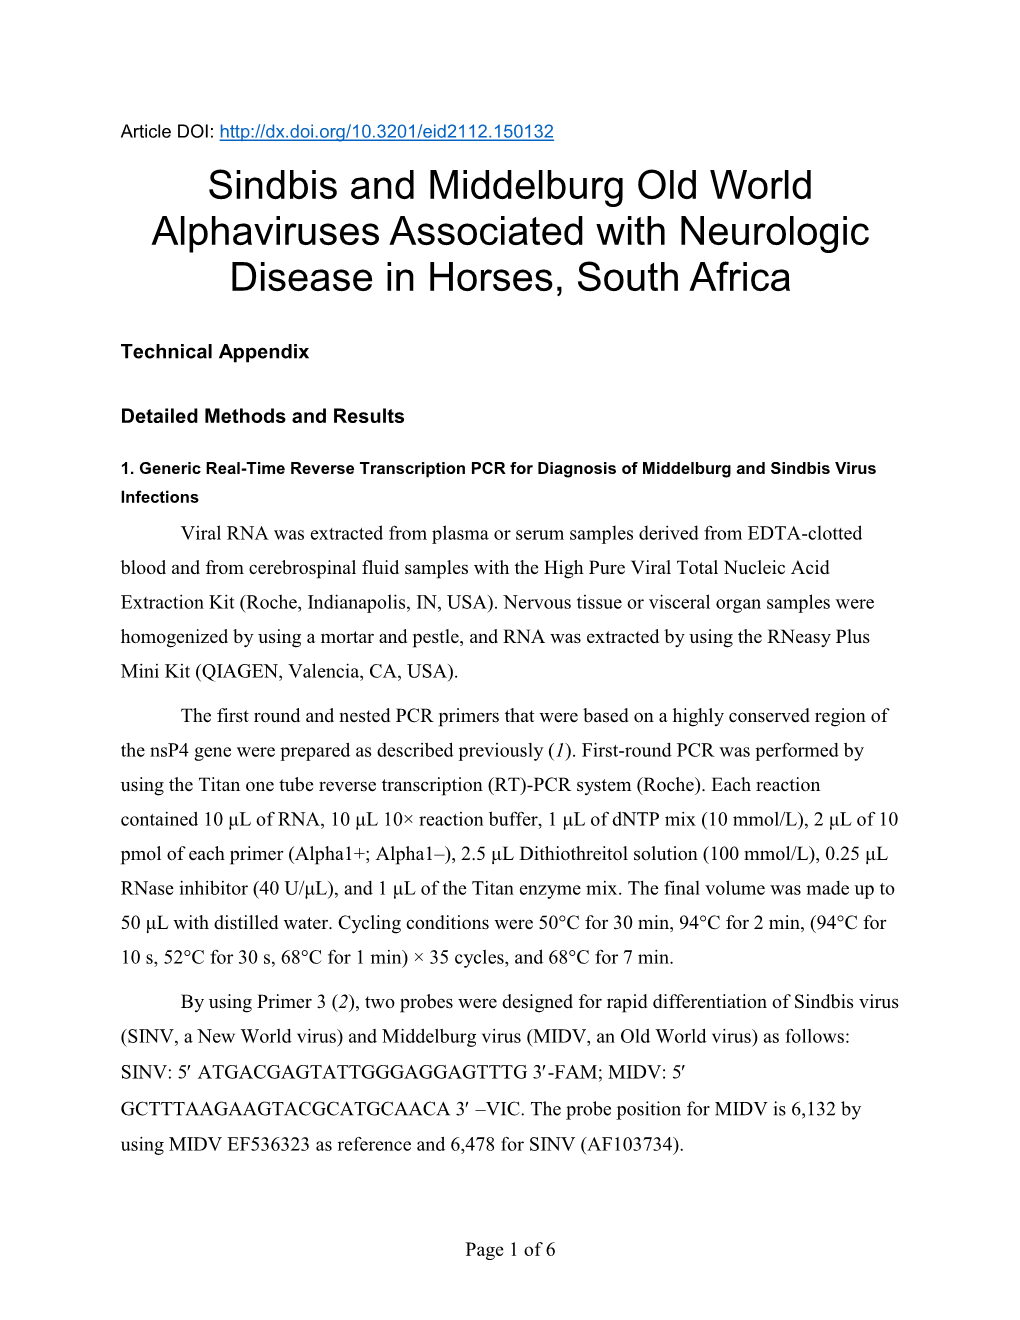 Sindbis and Middelburg Old World Alphaviruses Associated with Neurologic Disease in Horses, South Africa